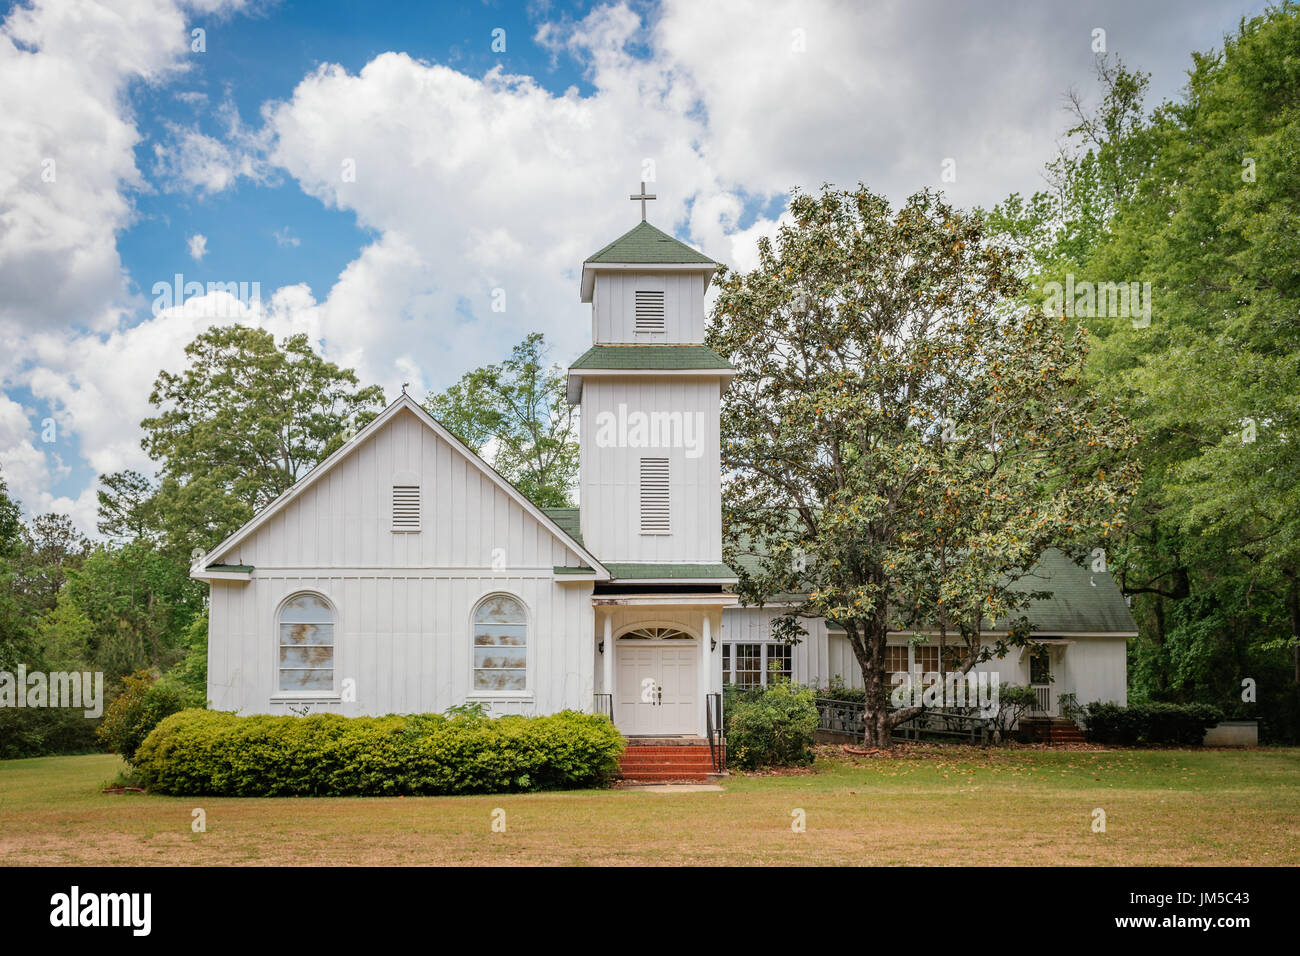 Small community United Methodist church in rural Alabama, USA. Stock Photo